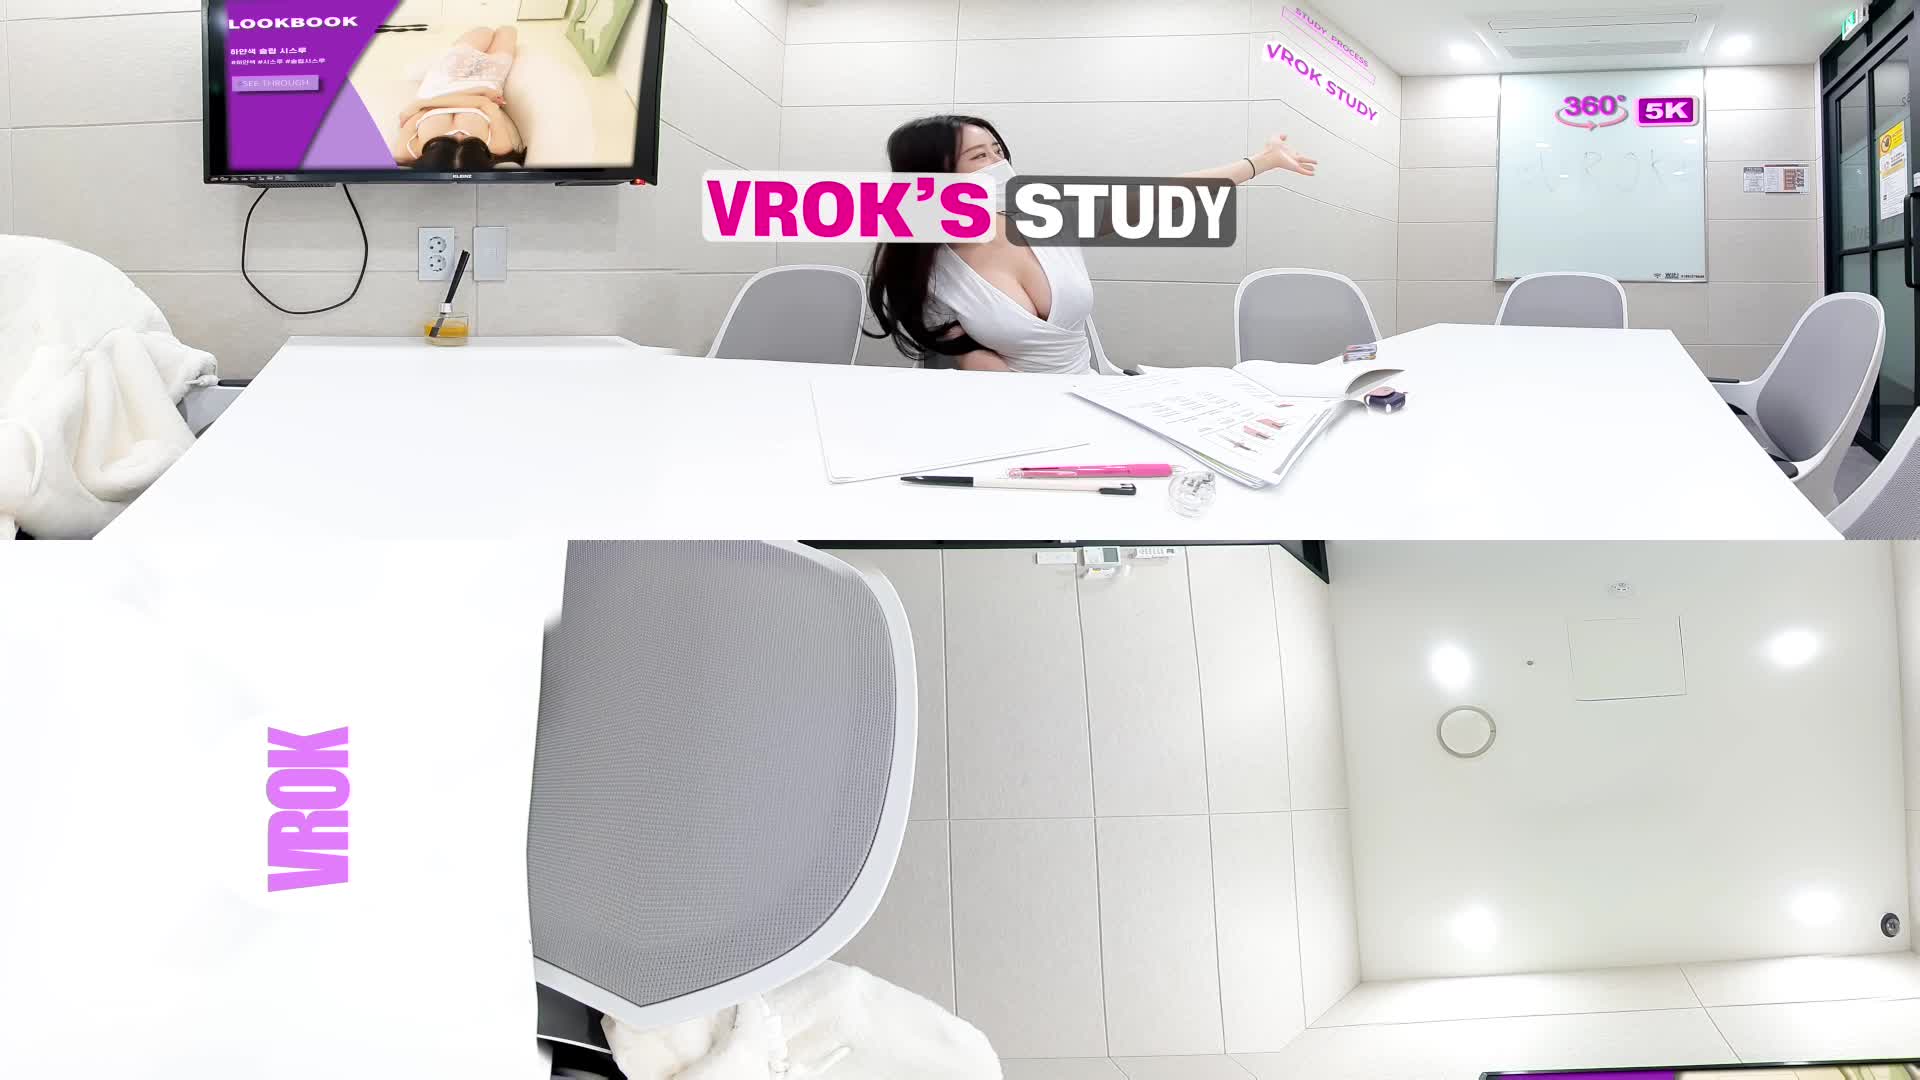 VROK 최초8K VR360 영상 _ 스터디 브이로그 _ 브이록의 공부방법을 소개합니다 _ 같이 공부해봐요 _ STUDY VLOG